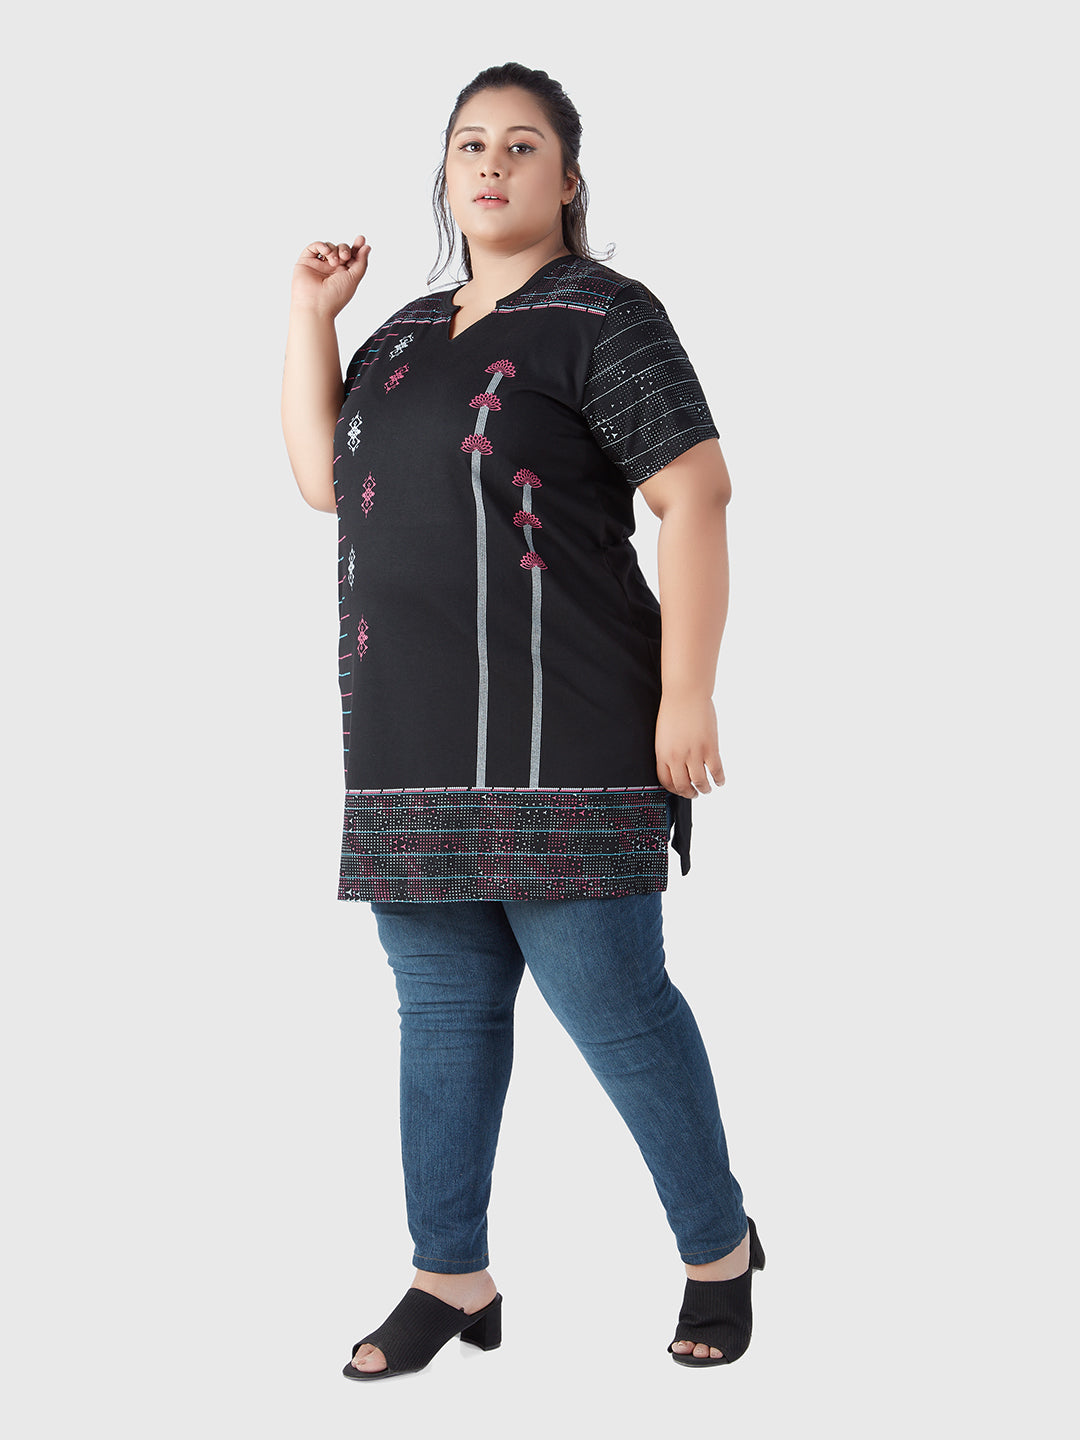 Plus Size Printed Long Tops For Women Half Sleeves - Black